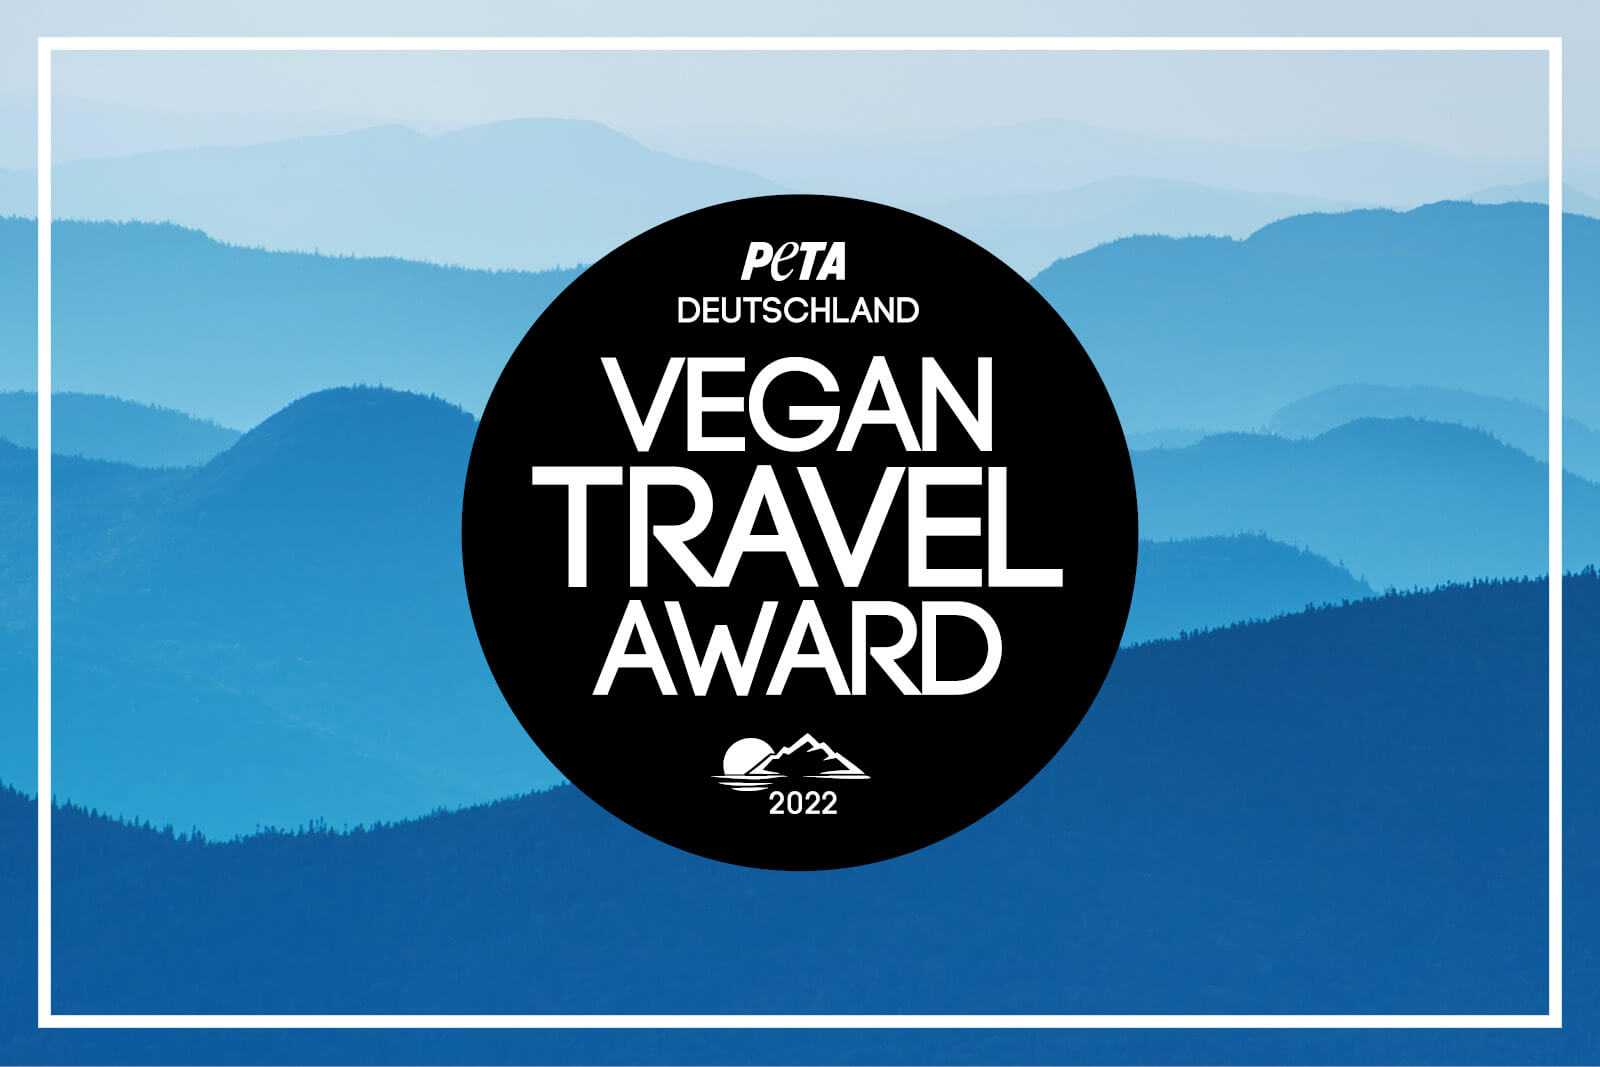 Vegan Travel Award 2022: Das sind die Gewinner | PETA